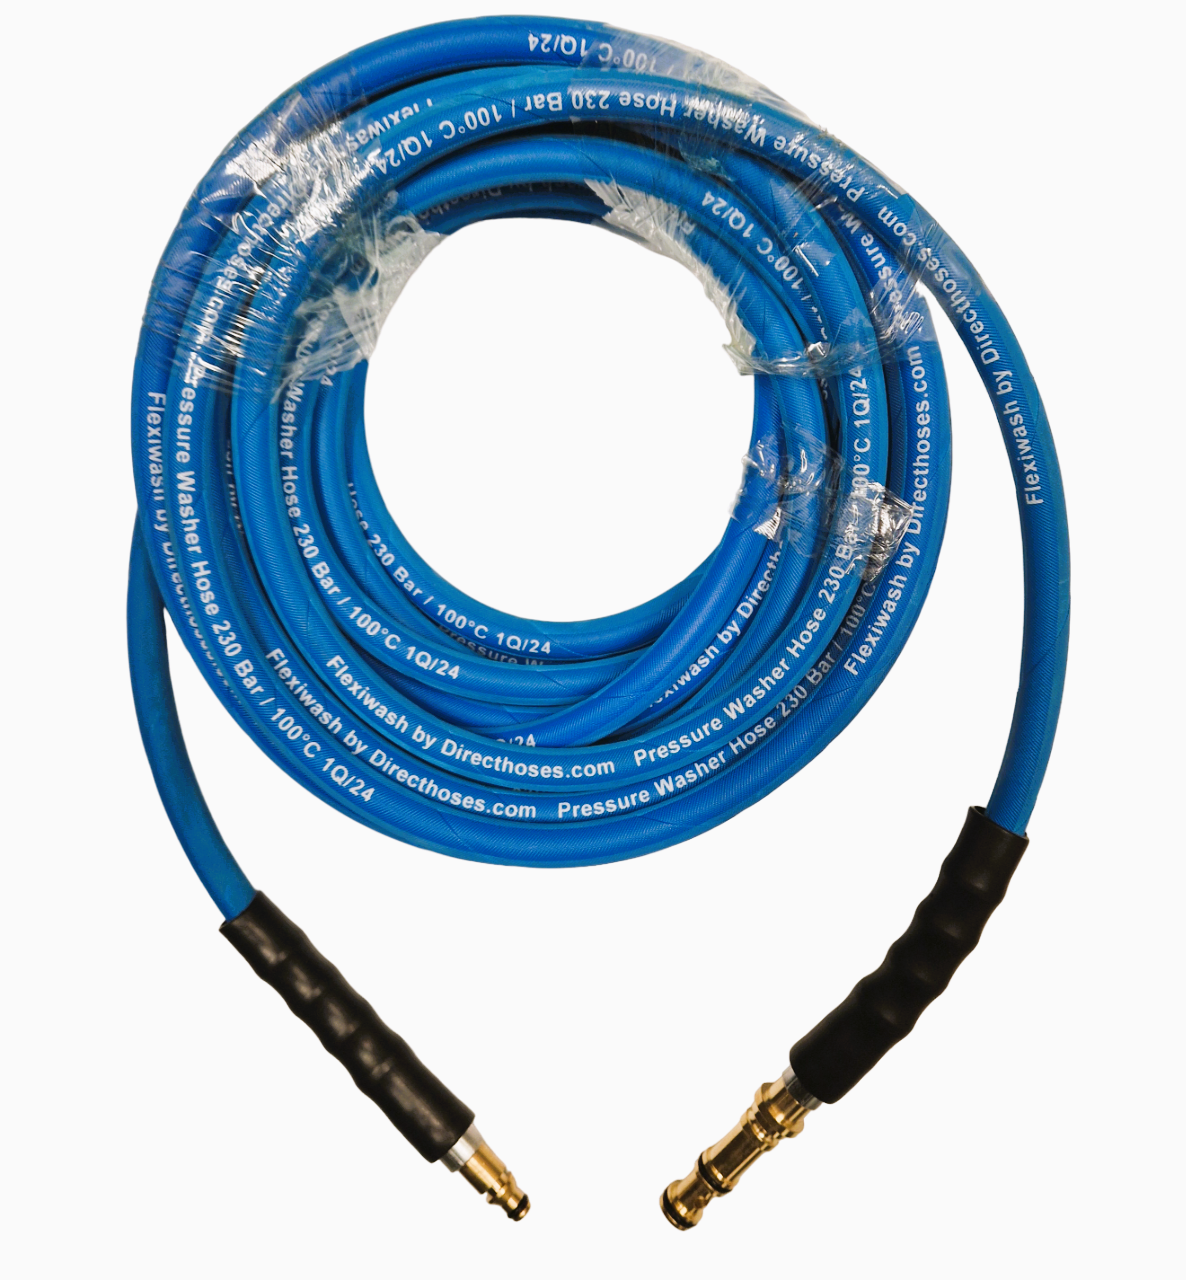 Nilfisk style replacement Rubber FLEXIWASH hose Quick fit trigger hose reel connection